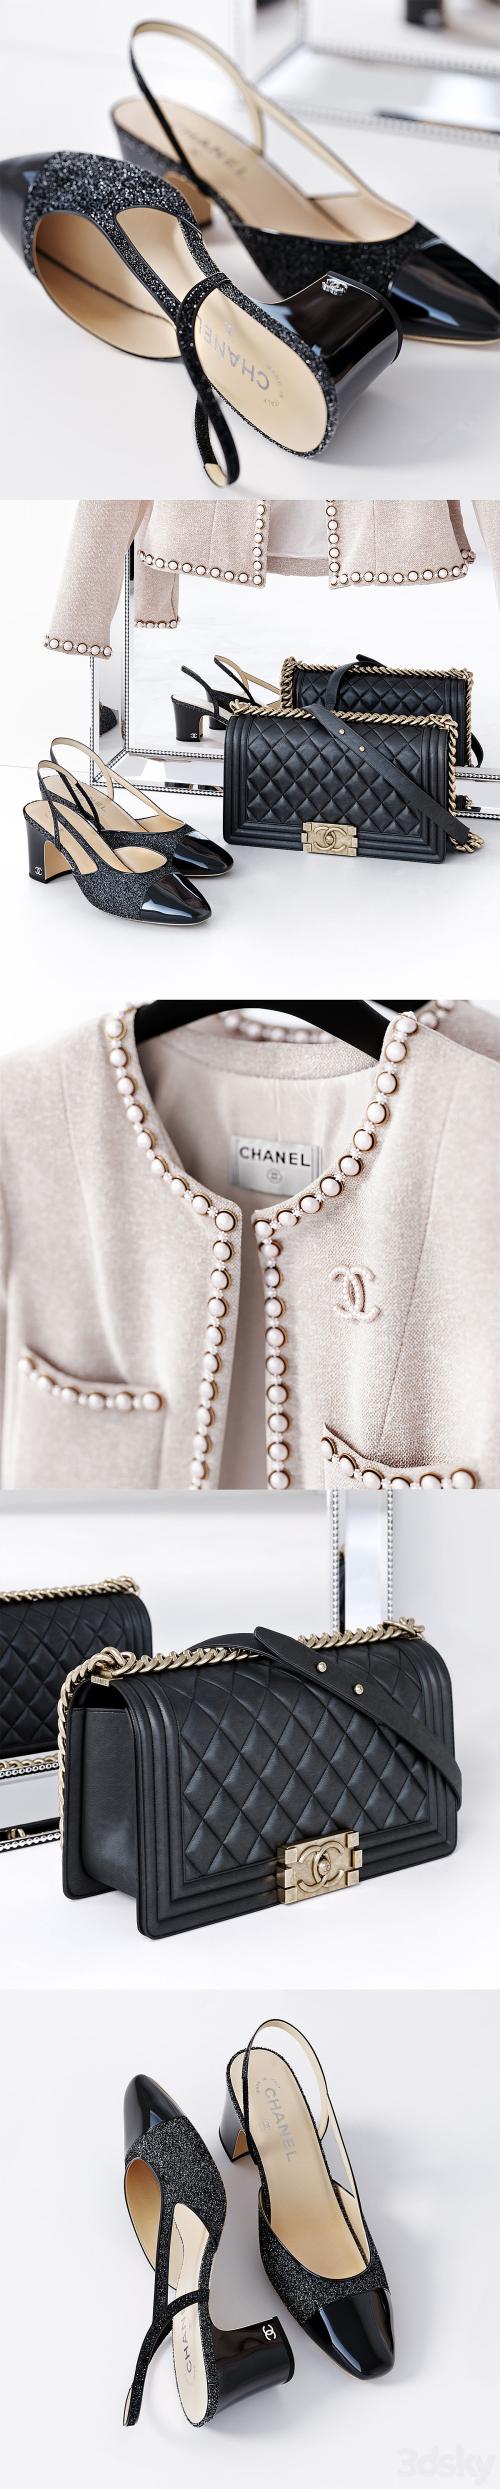 Chanel set